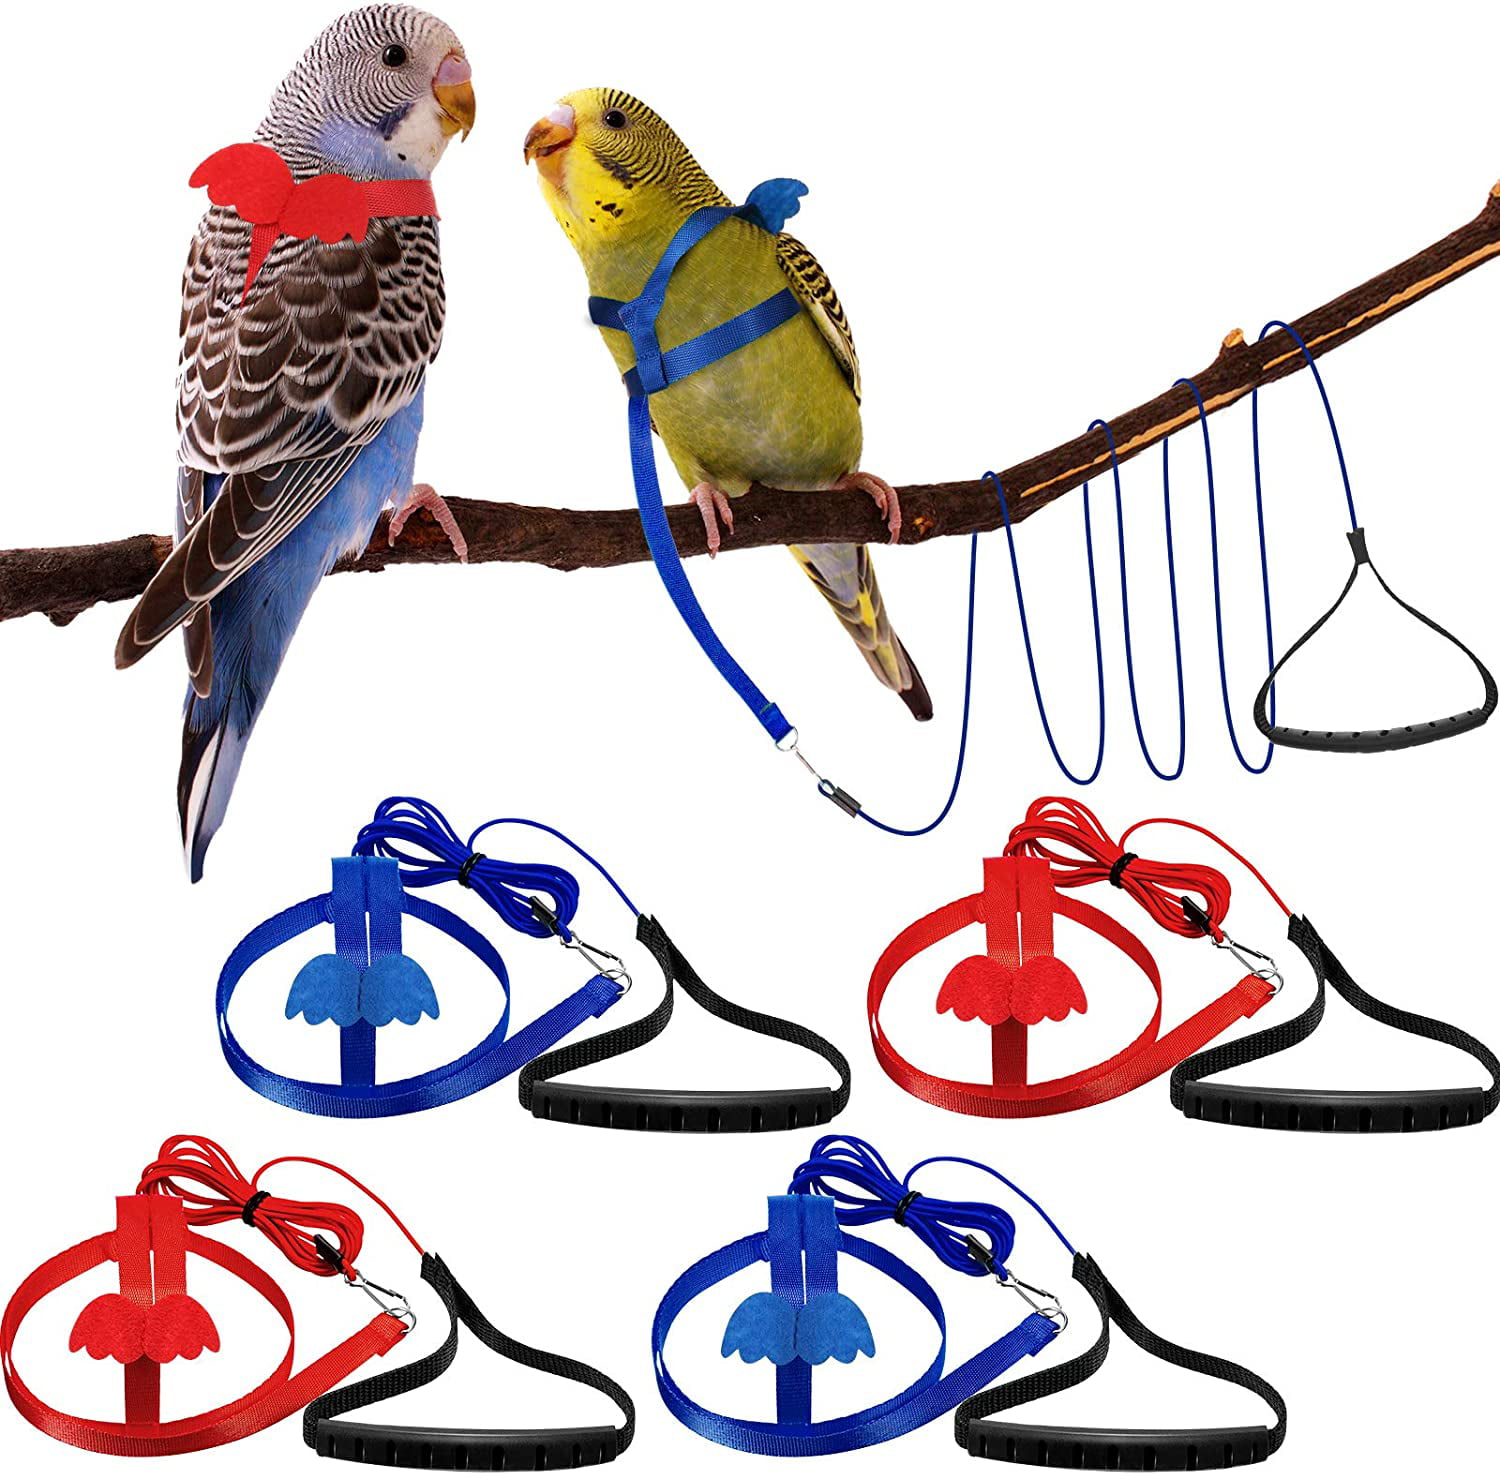 Birds Parrot Nappy Parrot Bird Harness Leash for Parrot Parakeet Outdoors 